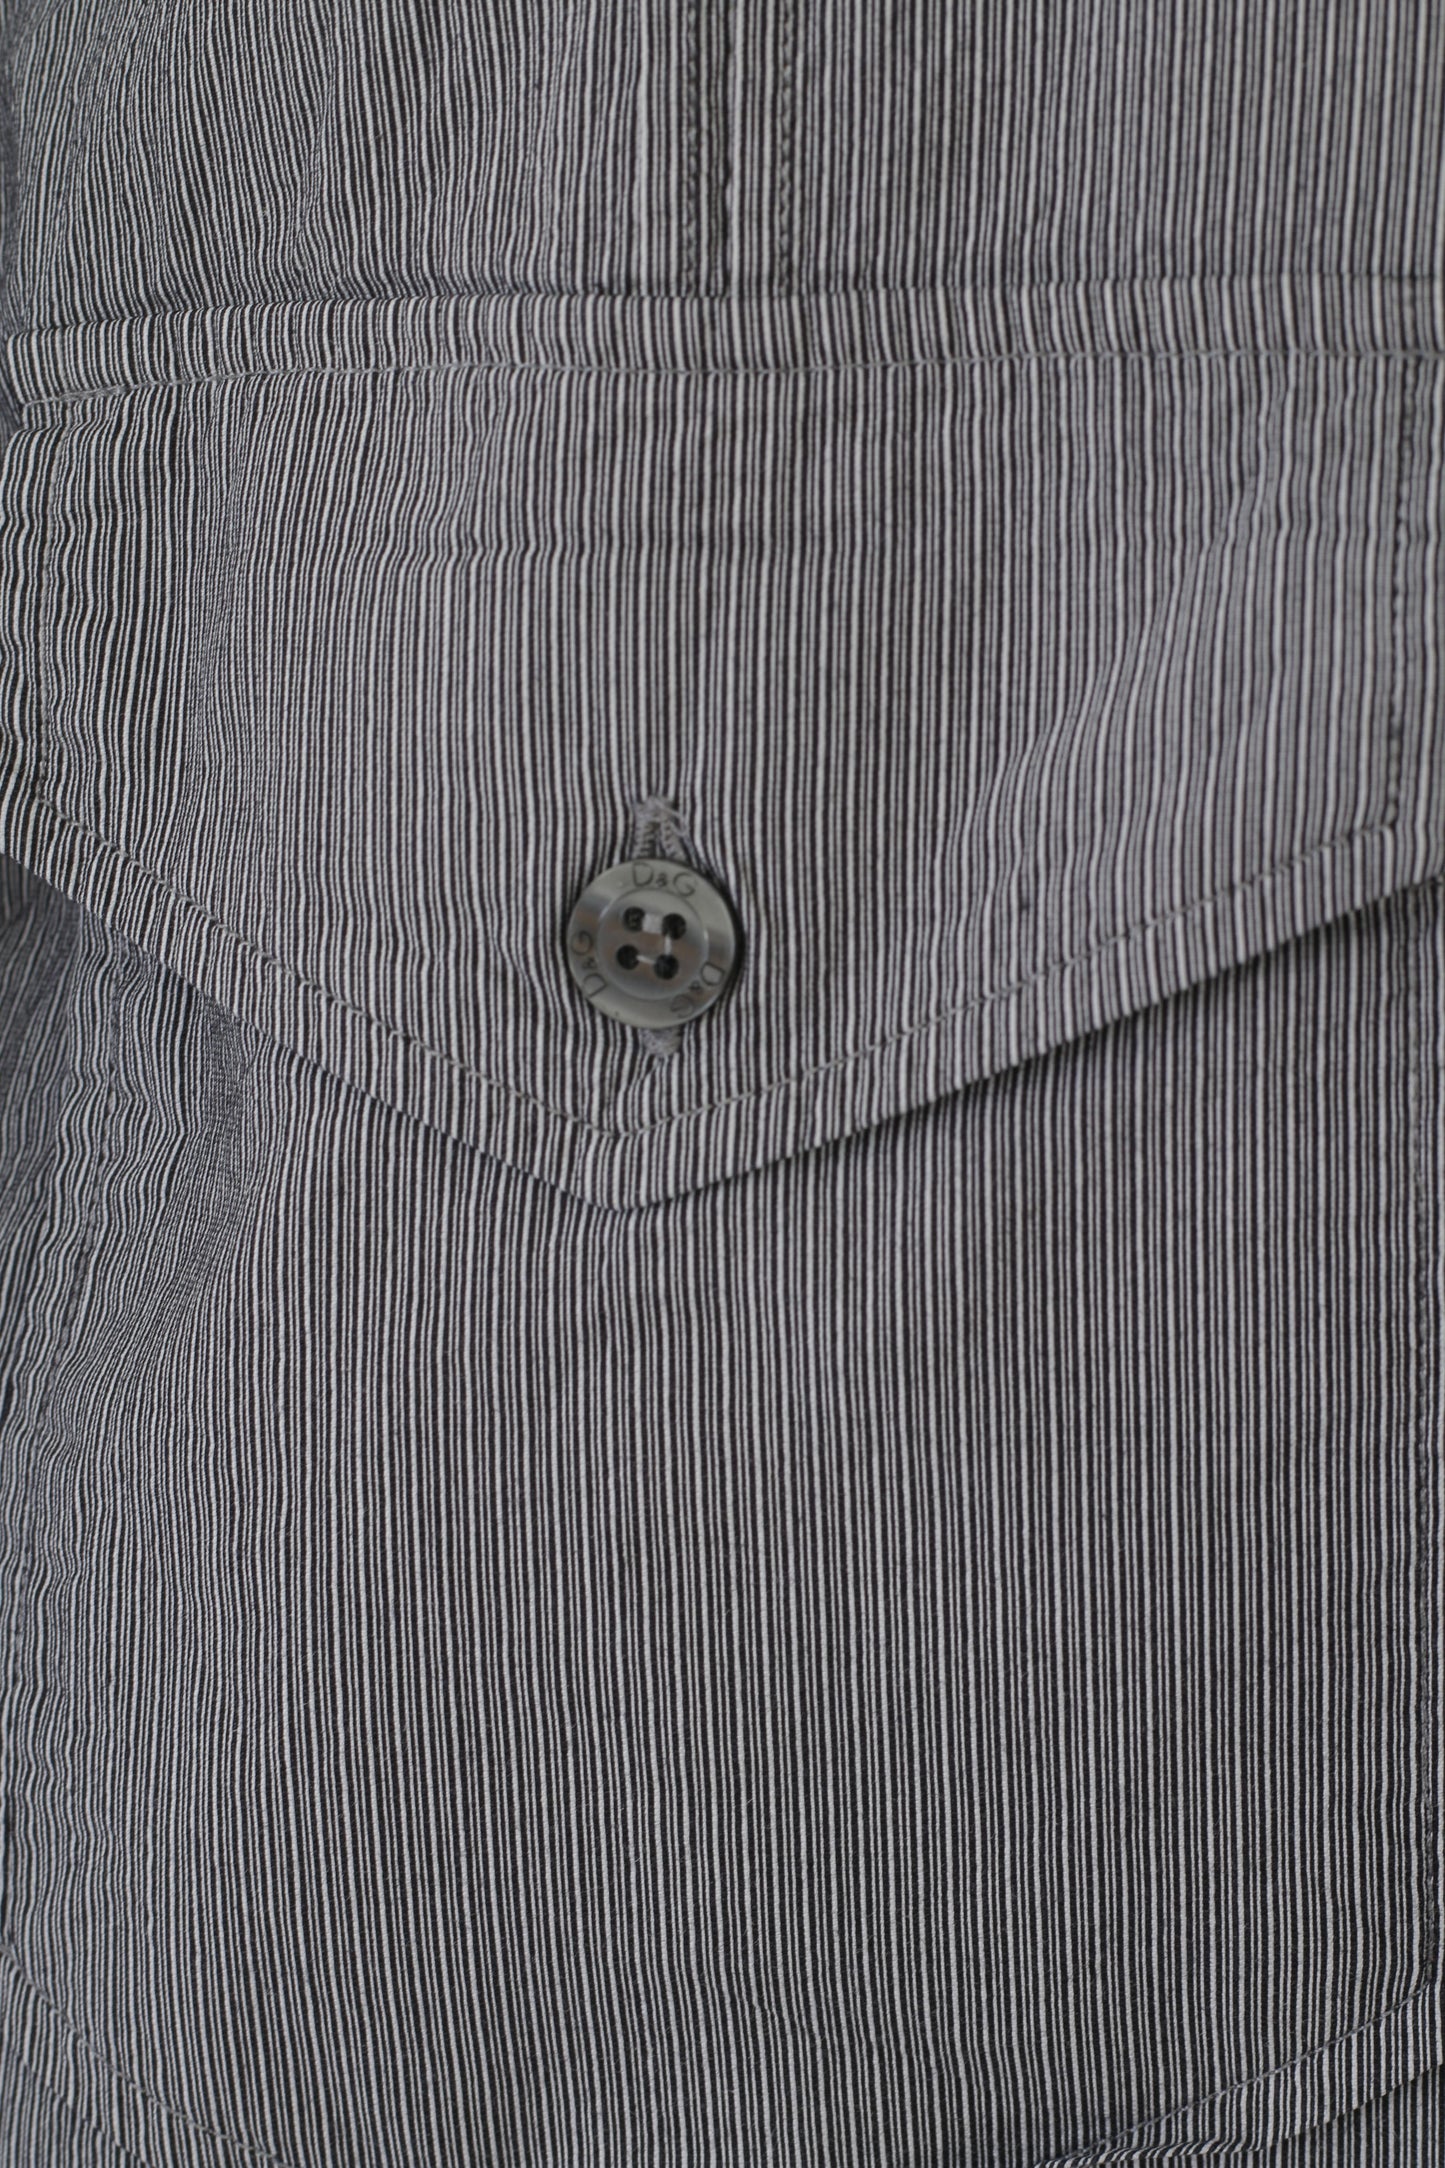 Dolce & Gabbana Men 16.5 42 M Casual Shirt Grey Striped Cotton Brad Long Sleeve Top